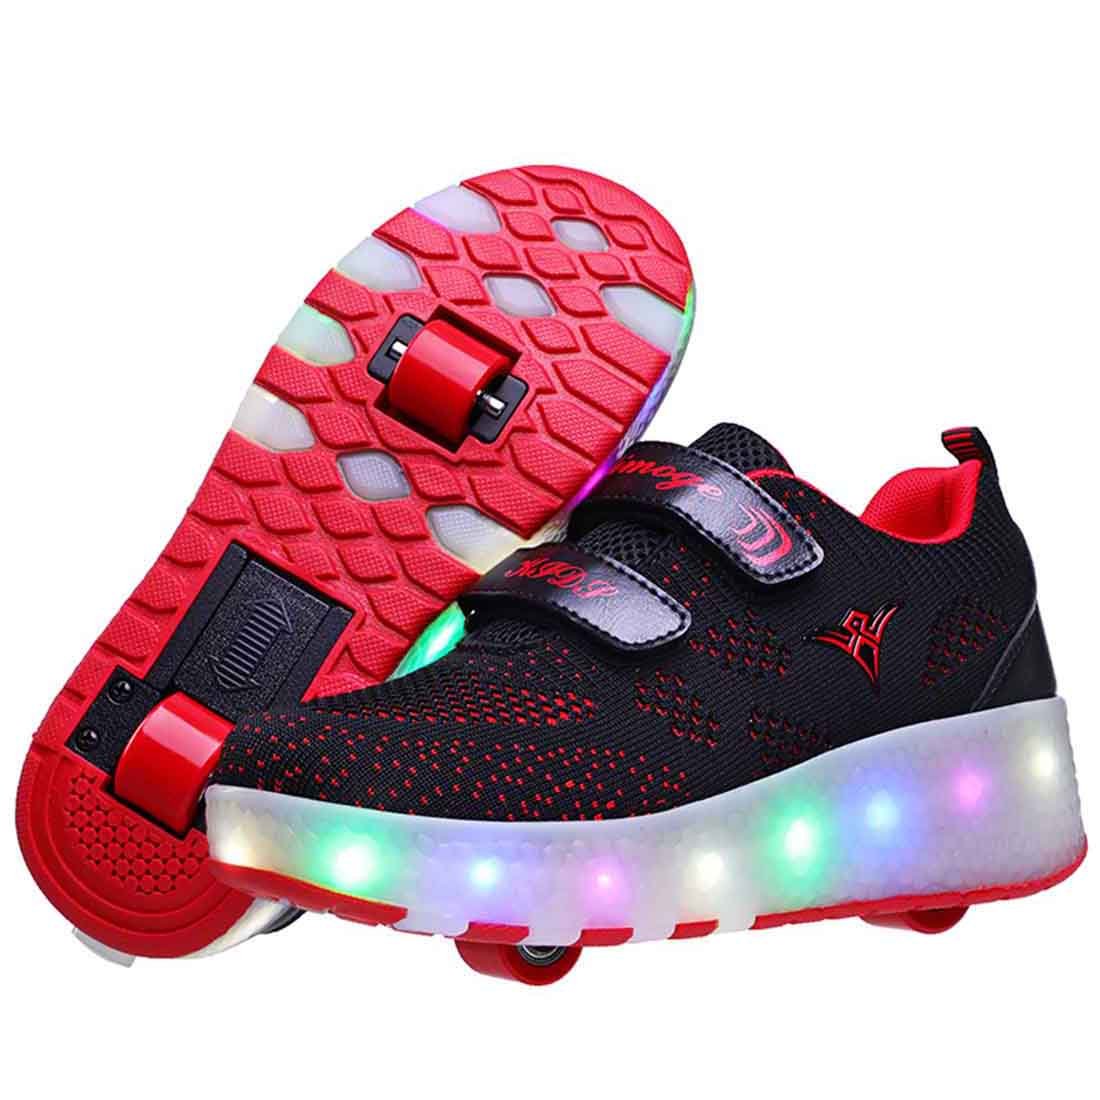 LED Light Up Wheel Shoes - kids